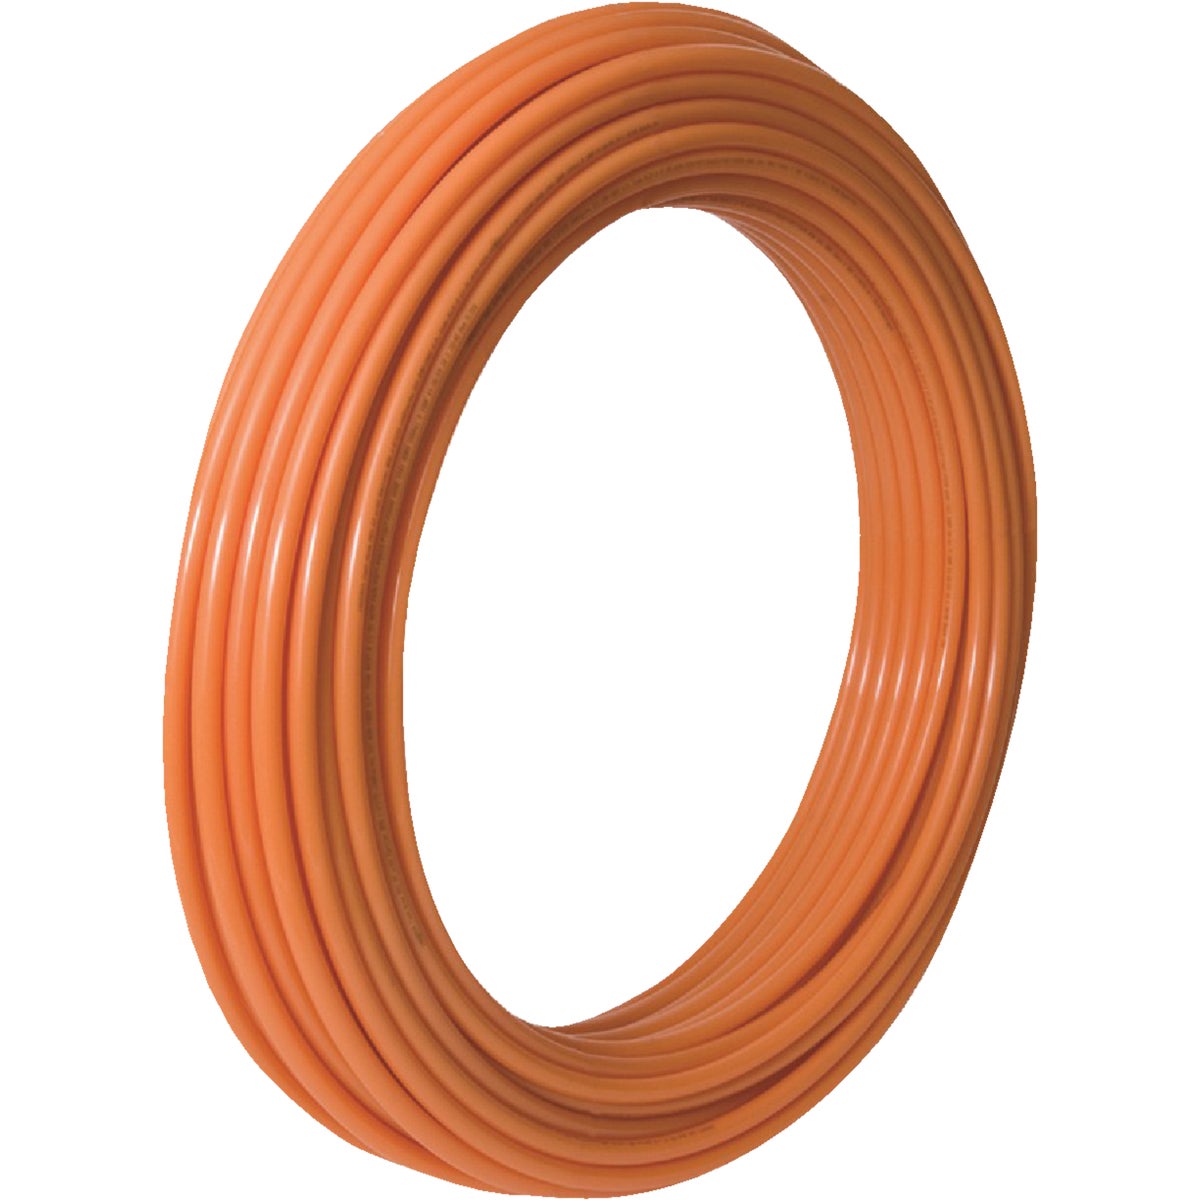 Item 451692, SharkBite PEX tubing is a cross-linked polyethylene tubing for a wide range